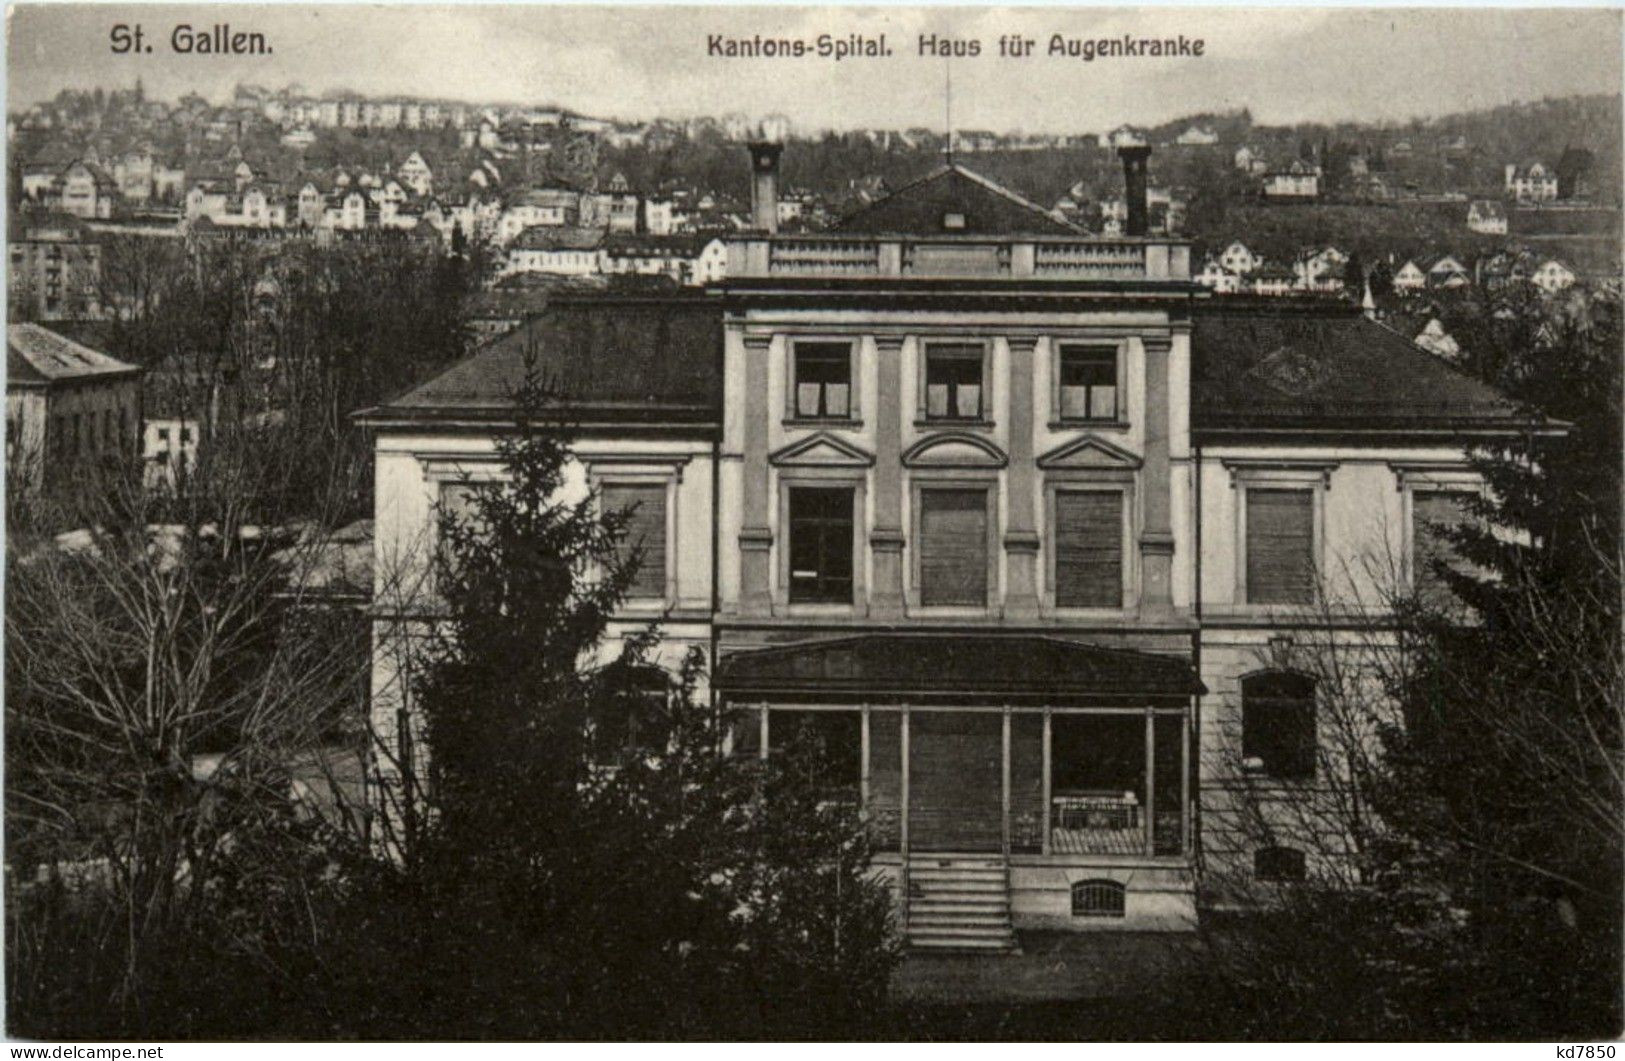 St. Gallen - Kantons Spital - Sankt Gallen